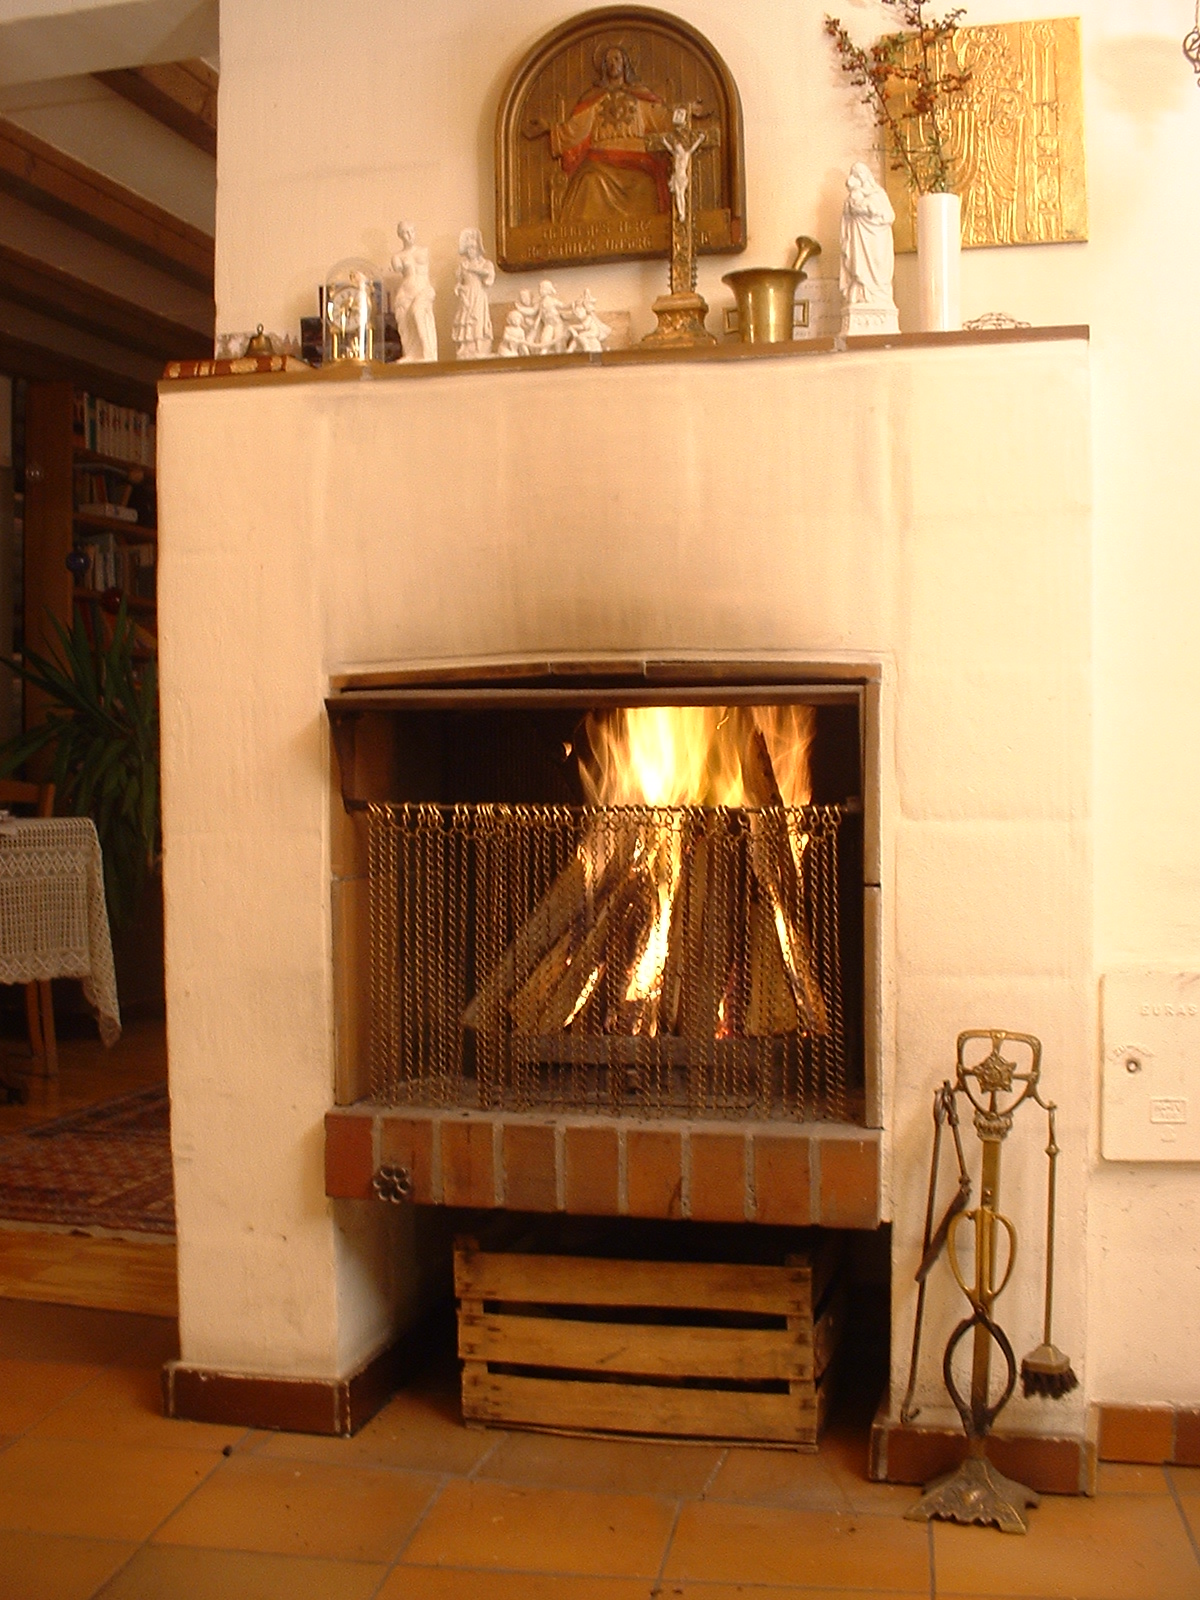 House Smells Like Smoke From Fireplace Luxury Fireplace